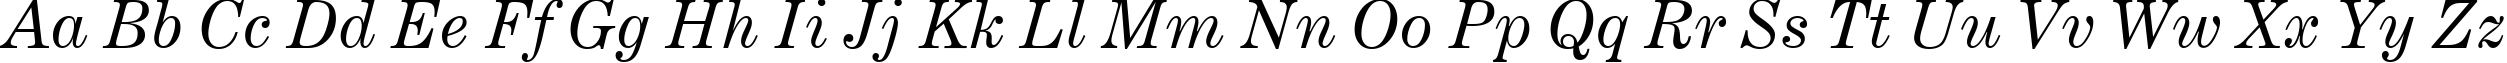 Пример написания английского алфавита шрифтом Century Expanded Italic BT